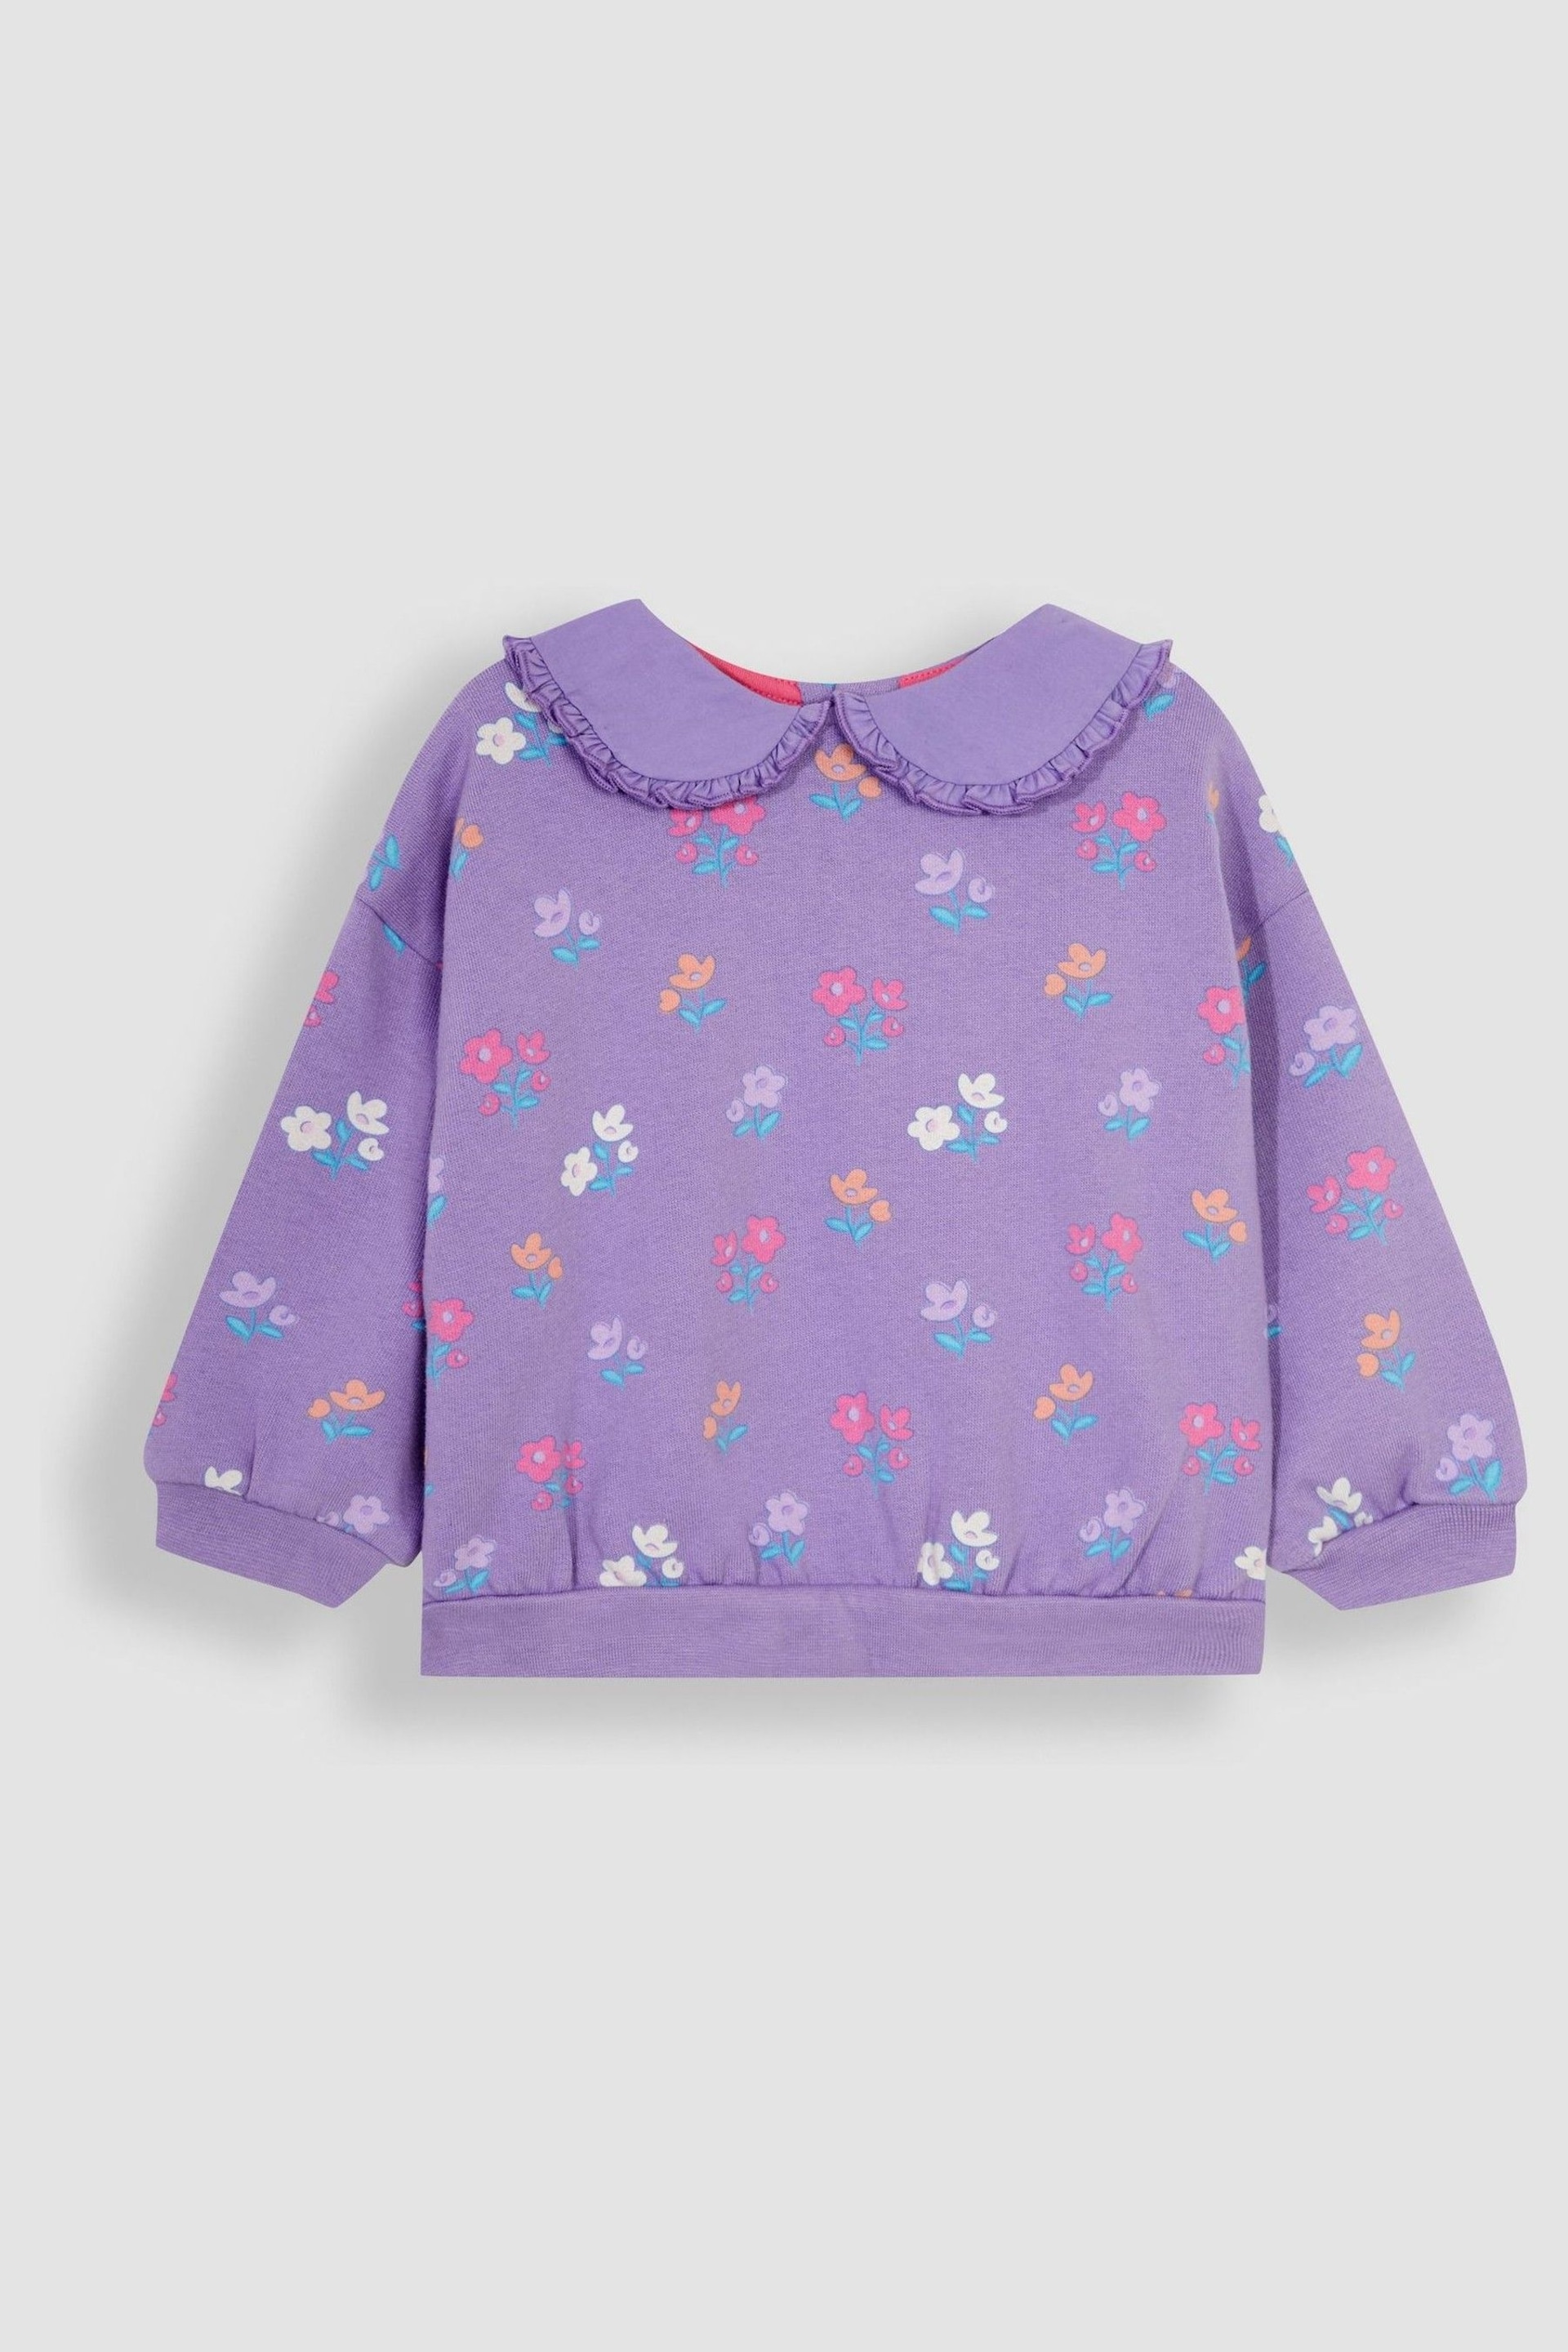 JoJo Maman Bébé Lilac Pretty Floral Sweatshirt With Collar - Image 1 of 3